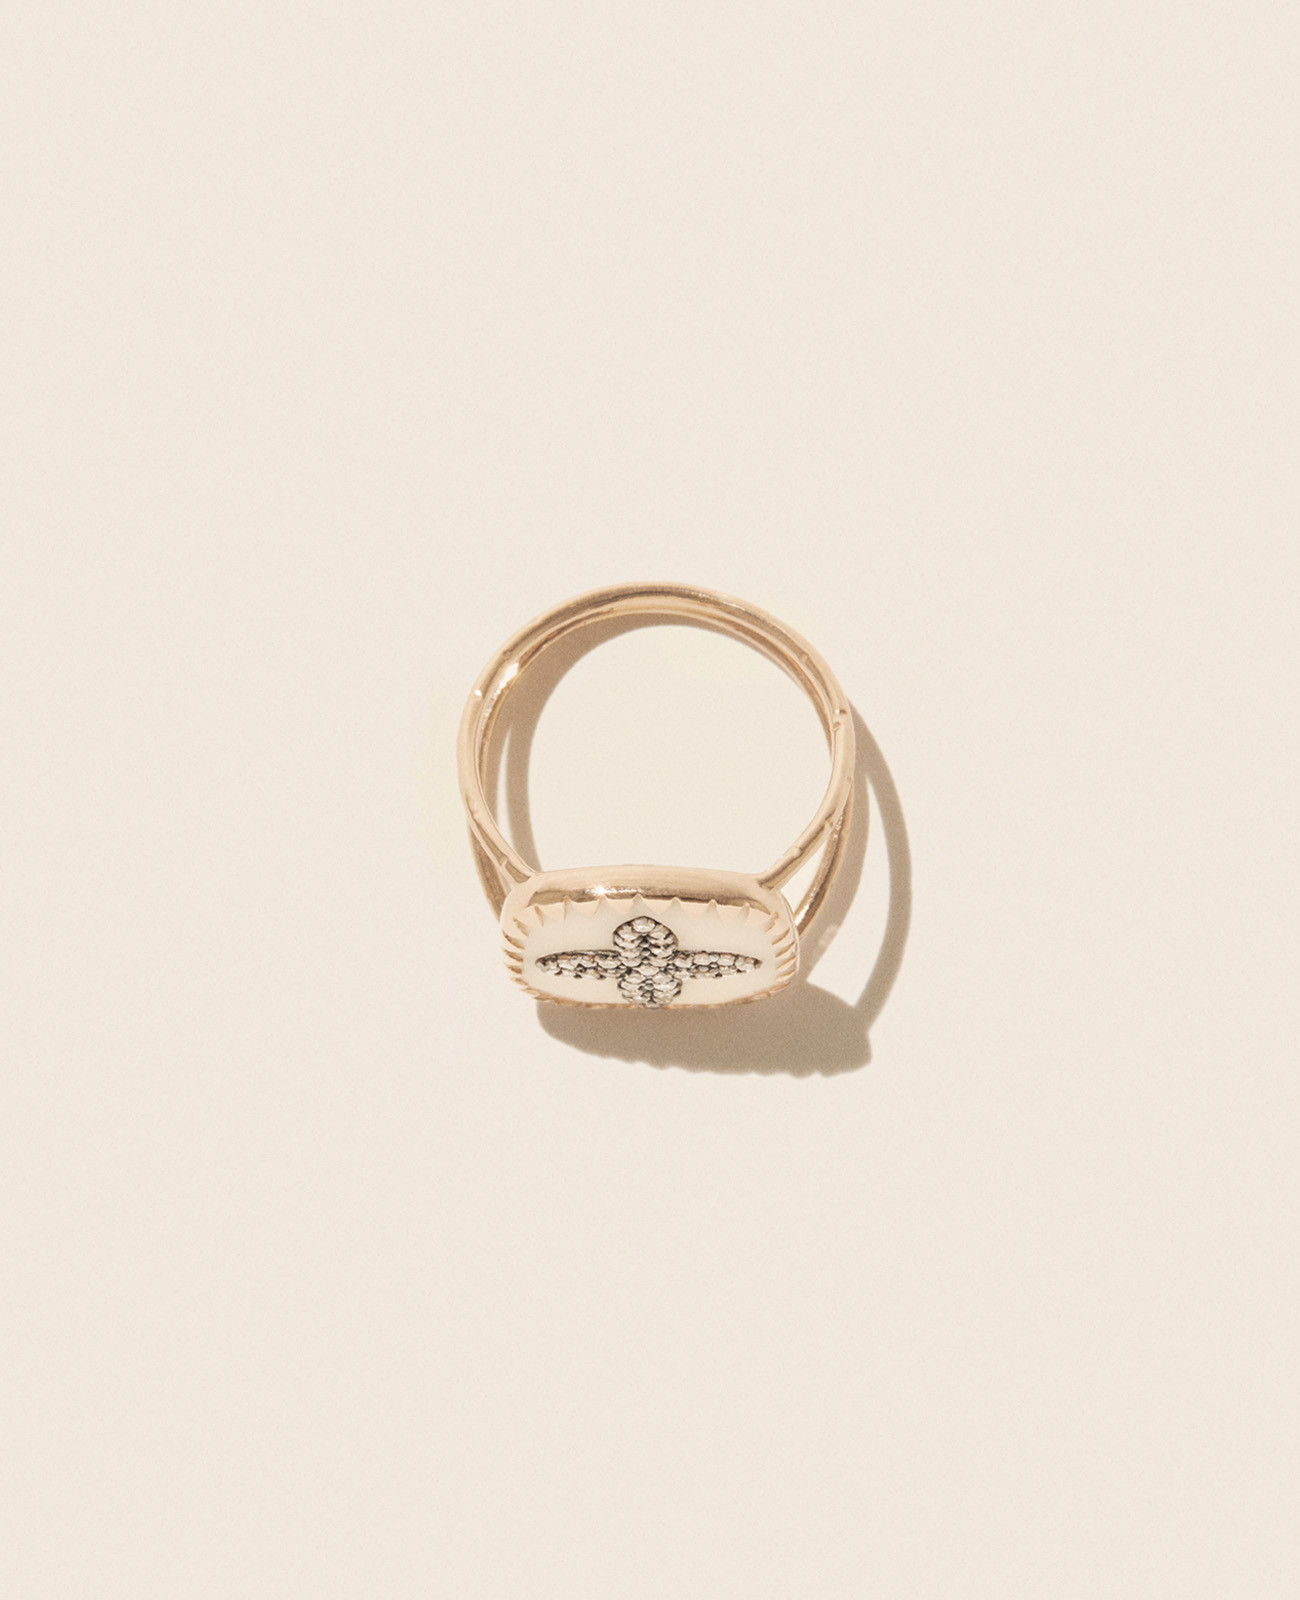 BOWIE N°2 WHITE DIAMOND ring pascale monvoisin jewelry paris